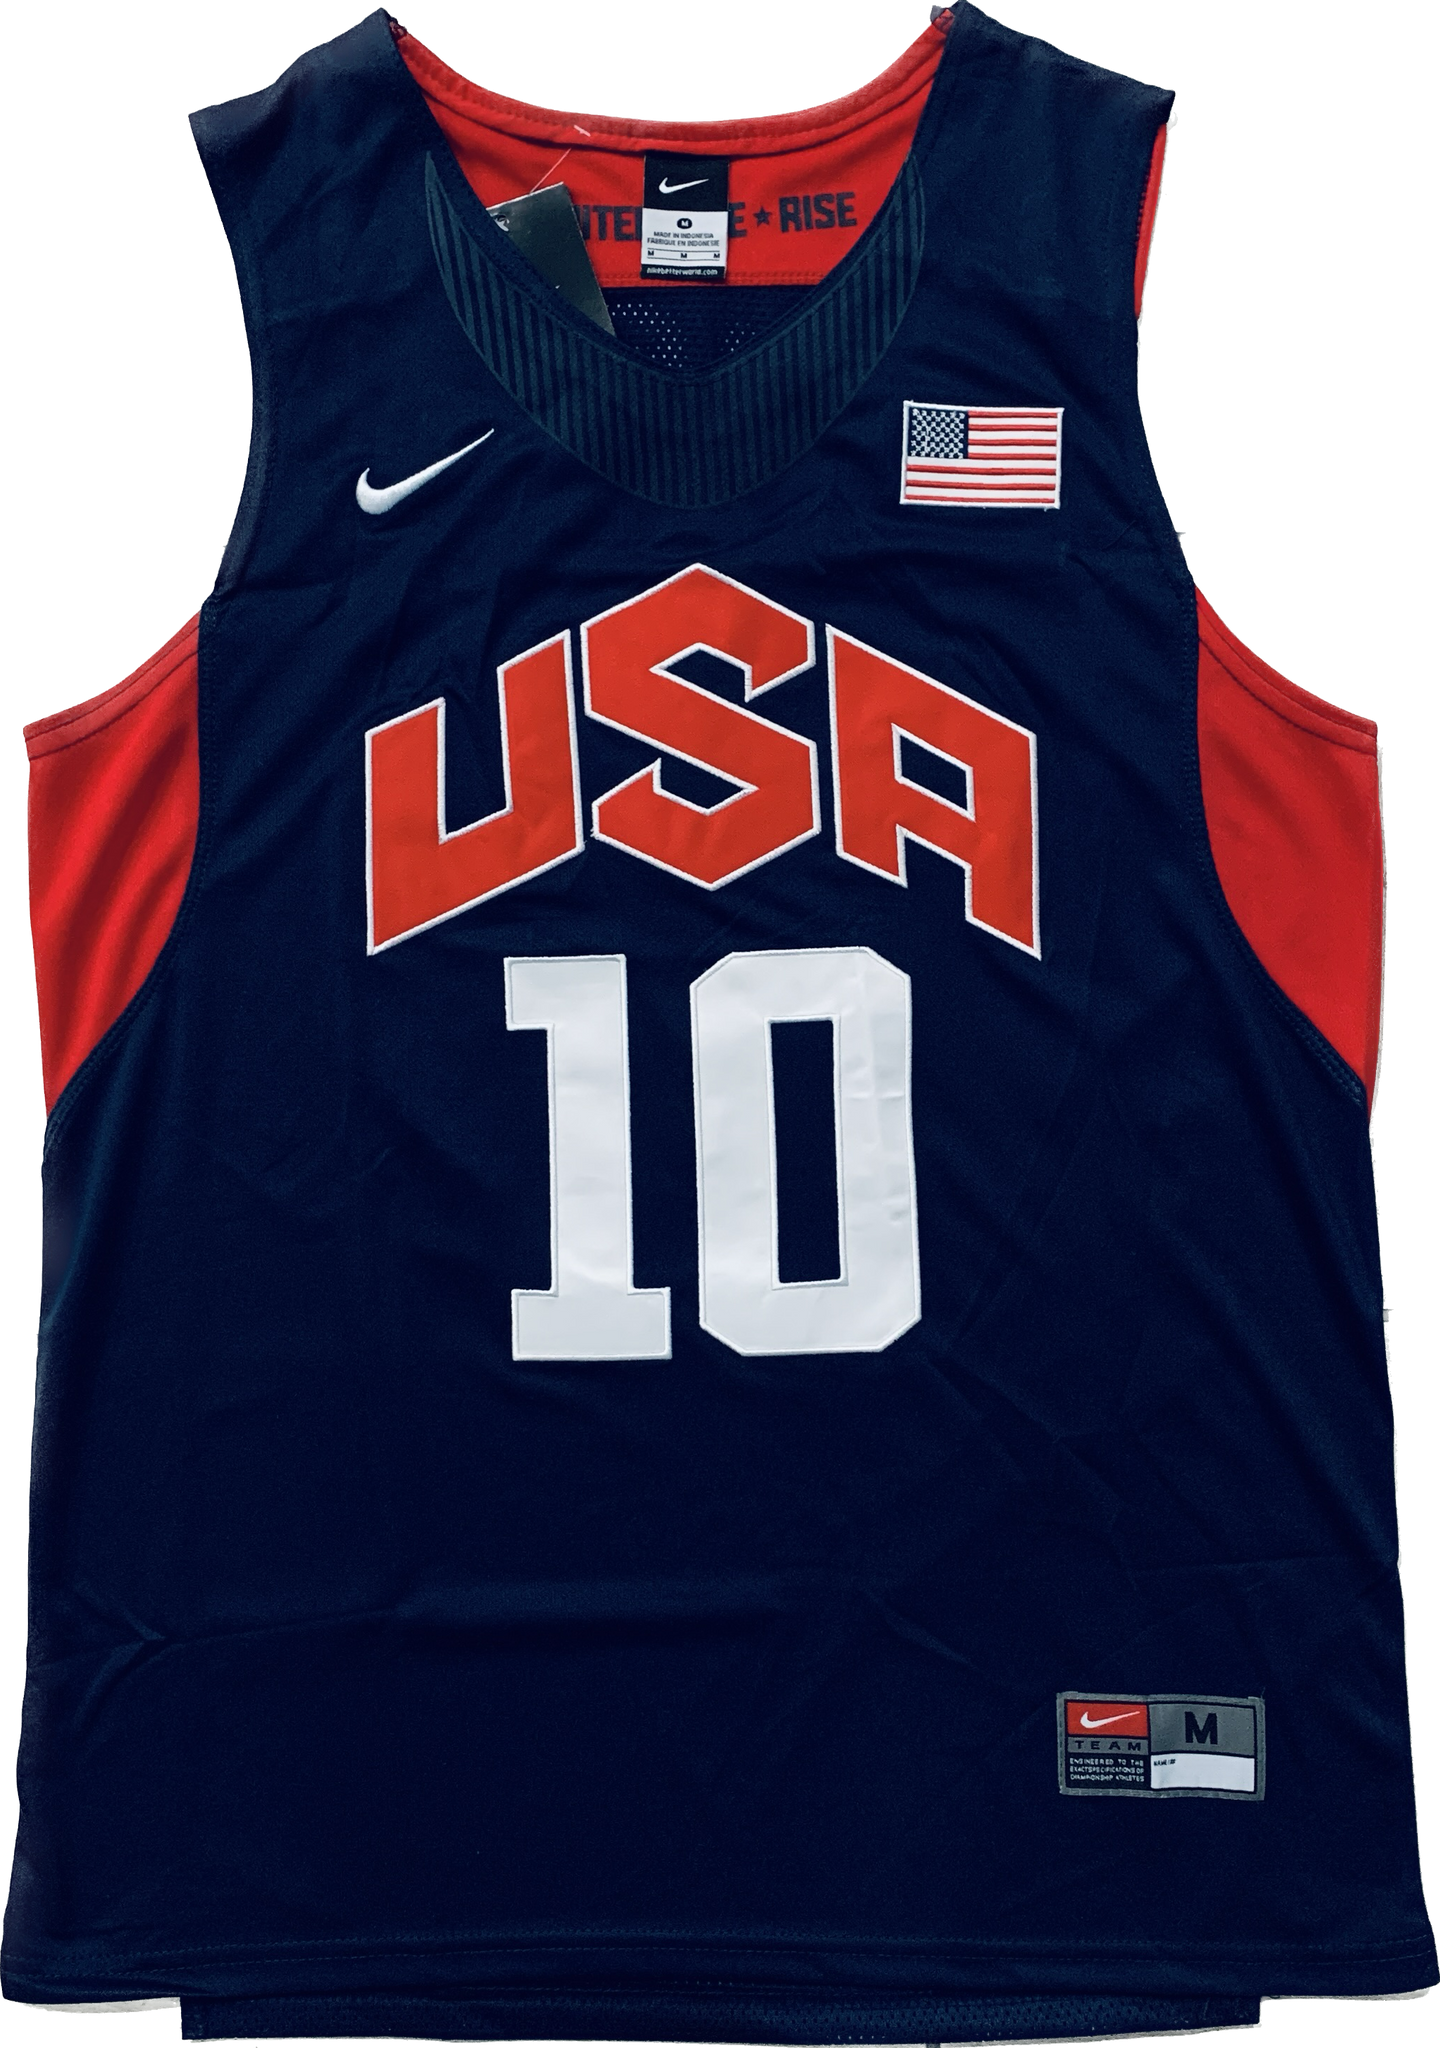 USA Basketball Olympic Team Nike Uniforms (PHOTOS)